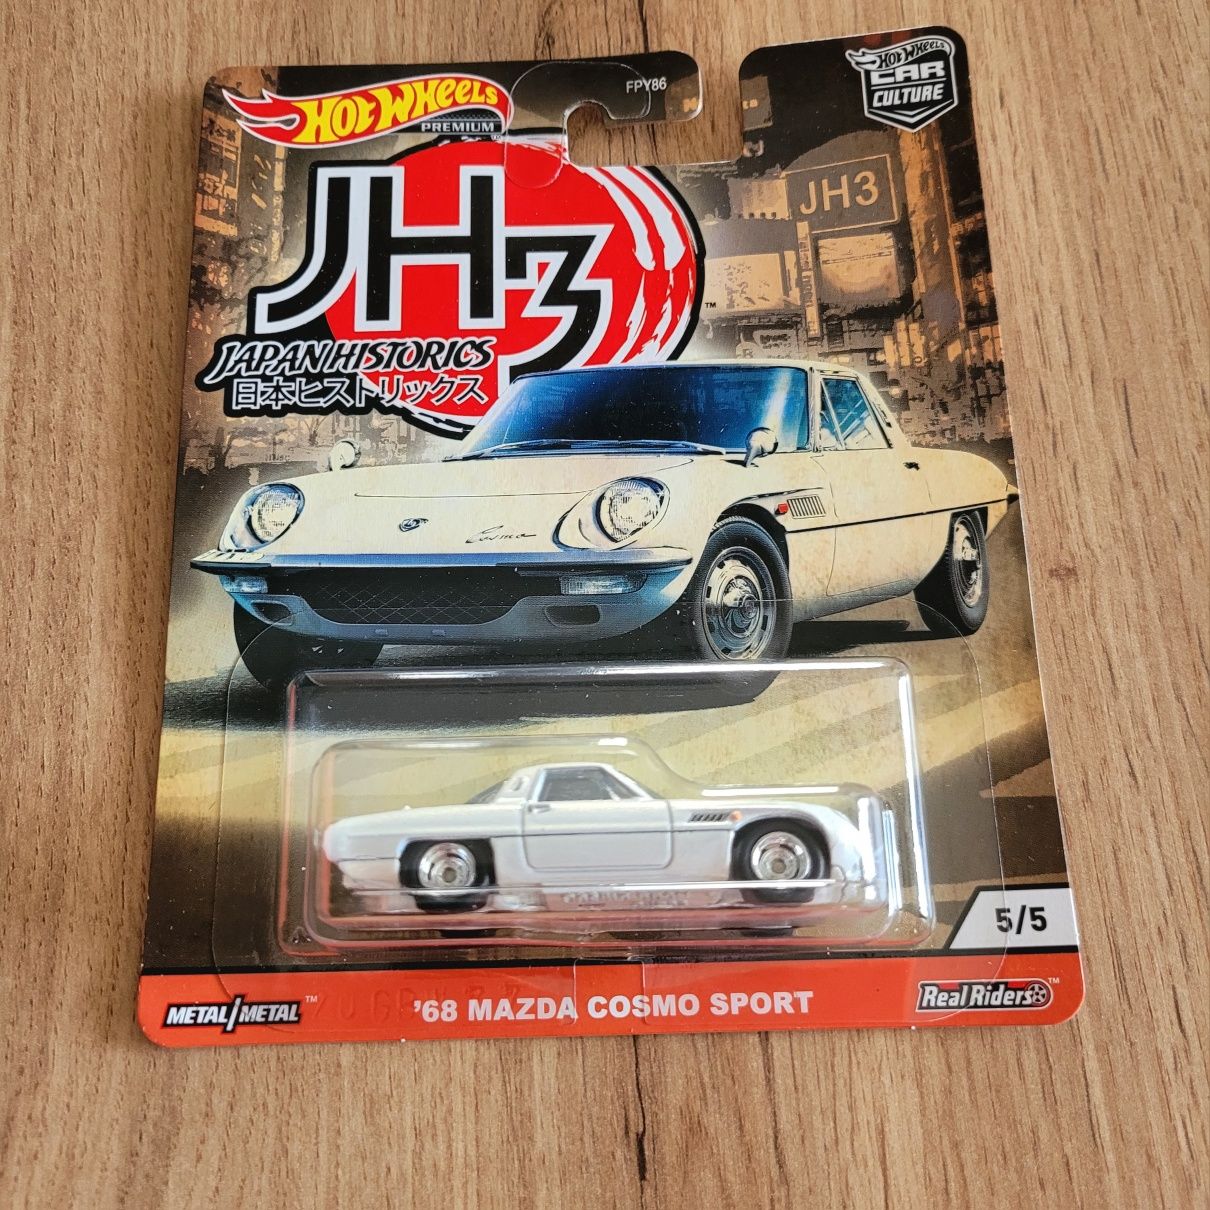 Hot Wheels Japan Historics '68 Mazda Cosmo Sport